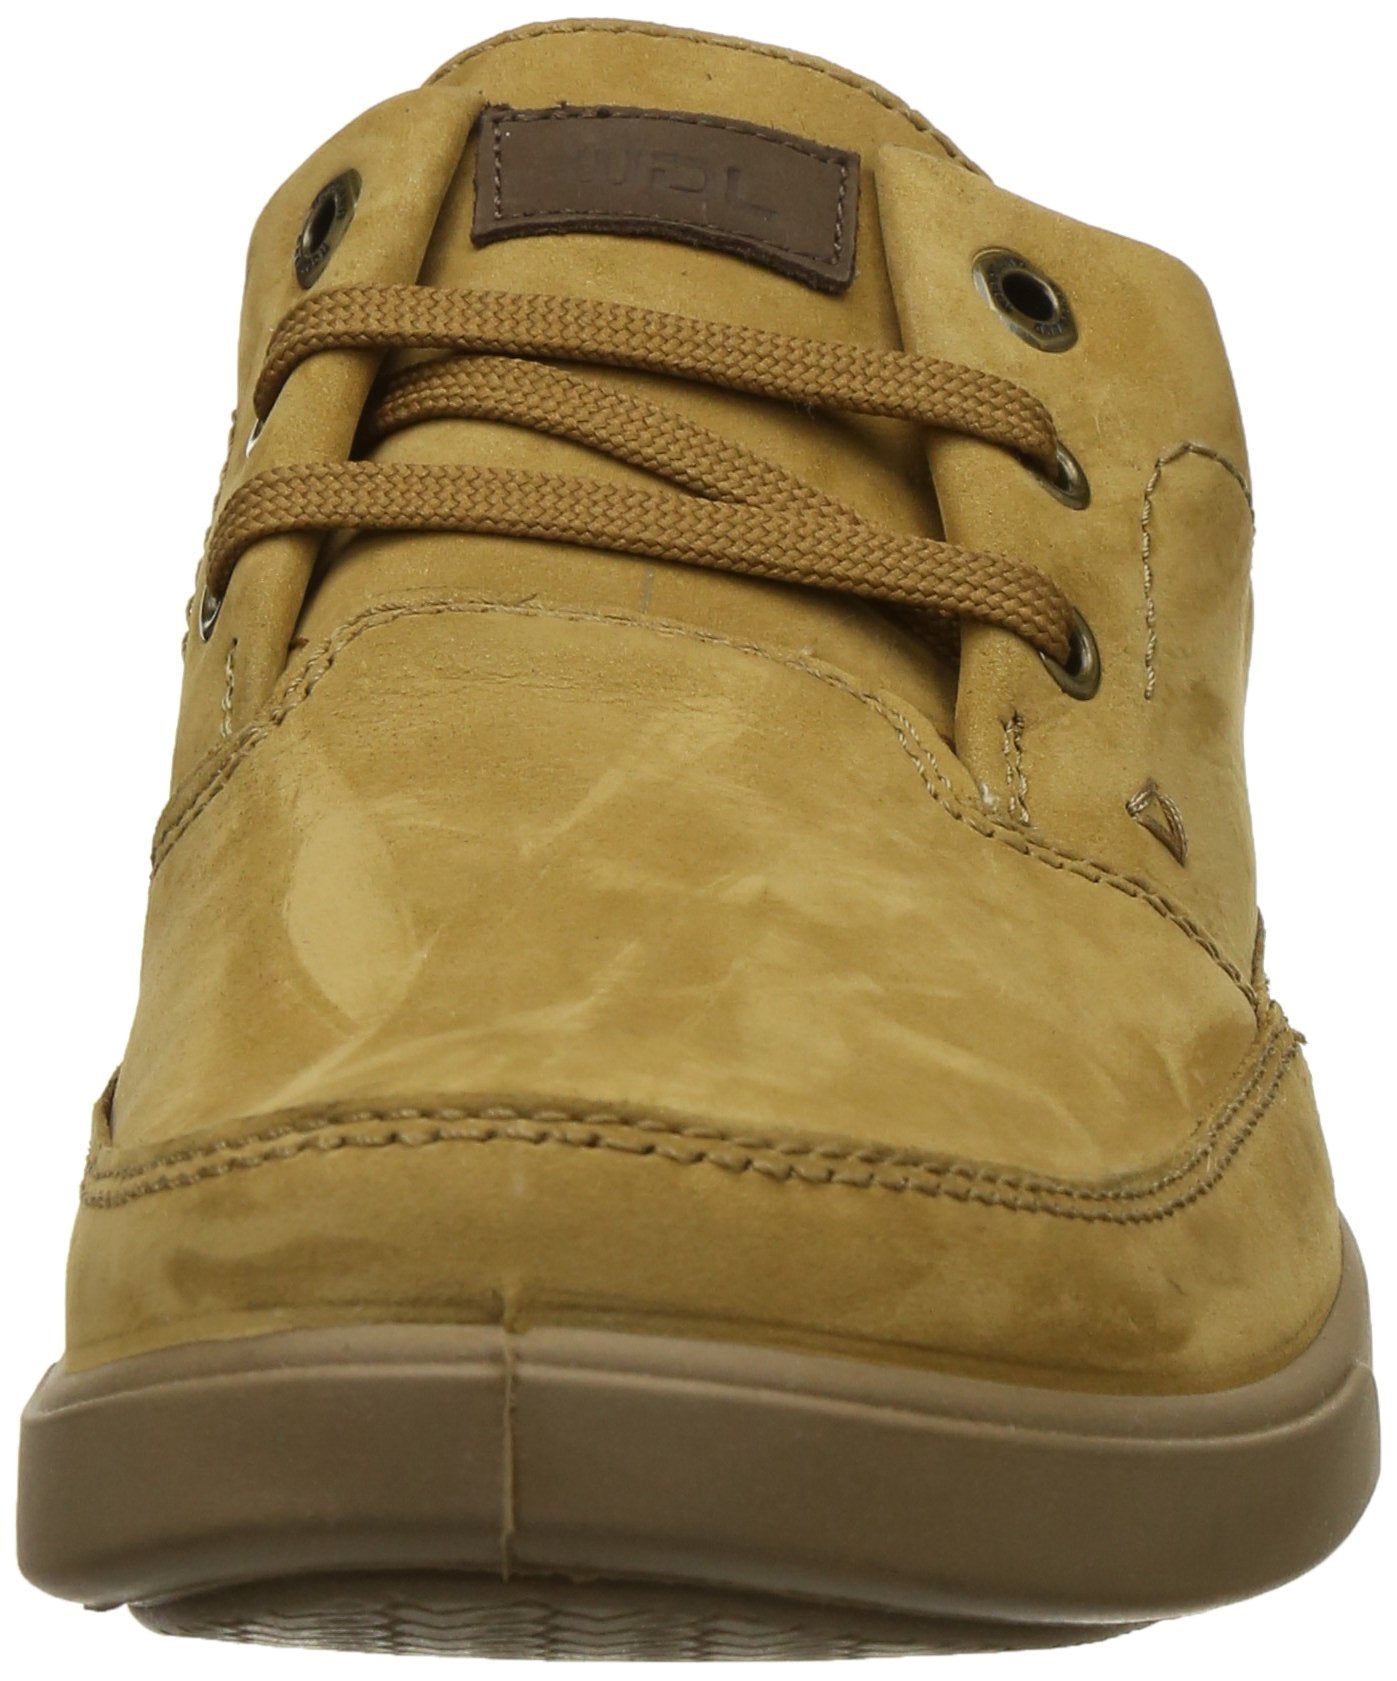 Woodland Men's Camel Leather Sneaker-9 UK (43 EU) (GC 1759115)